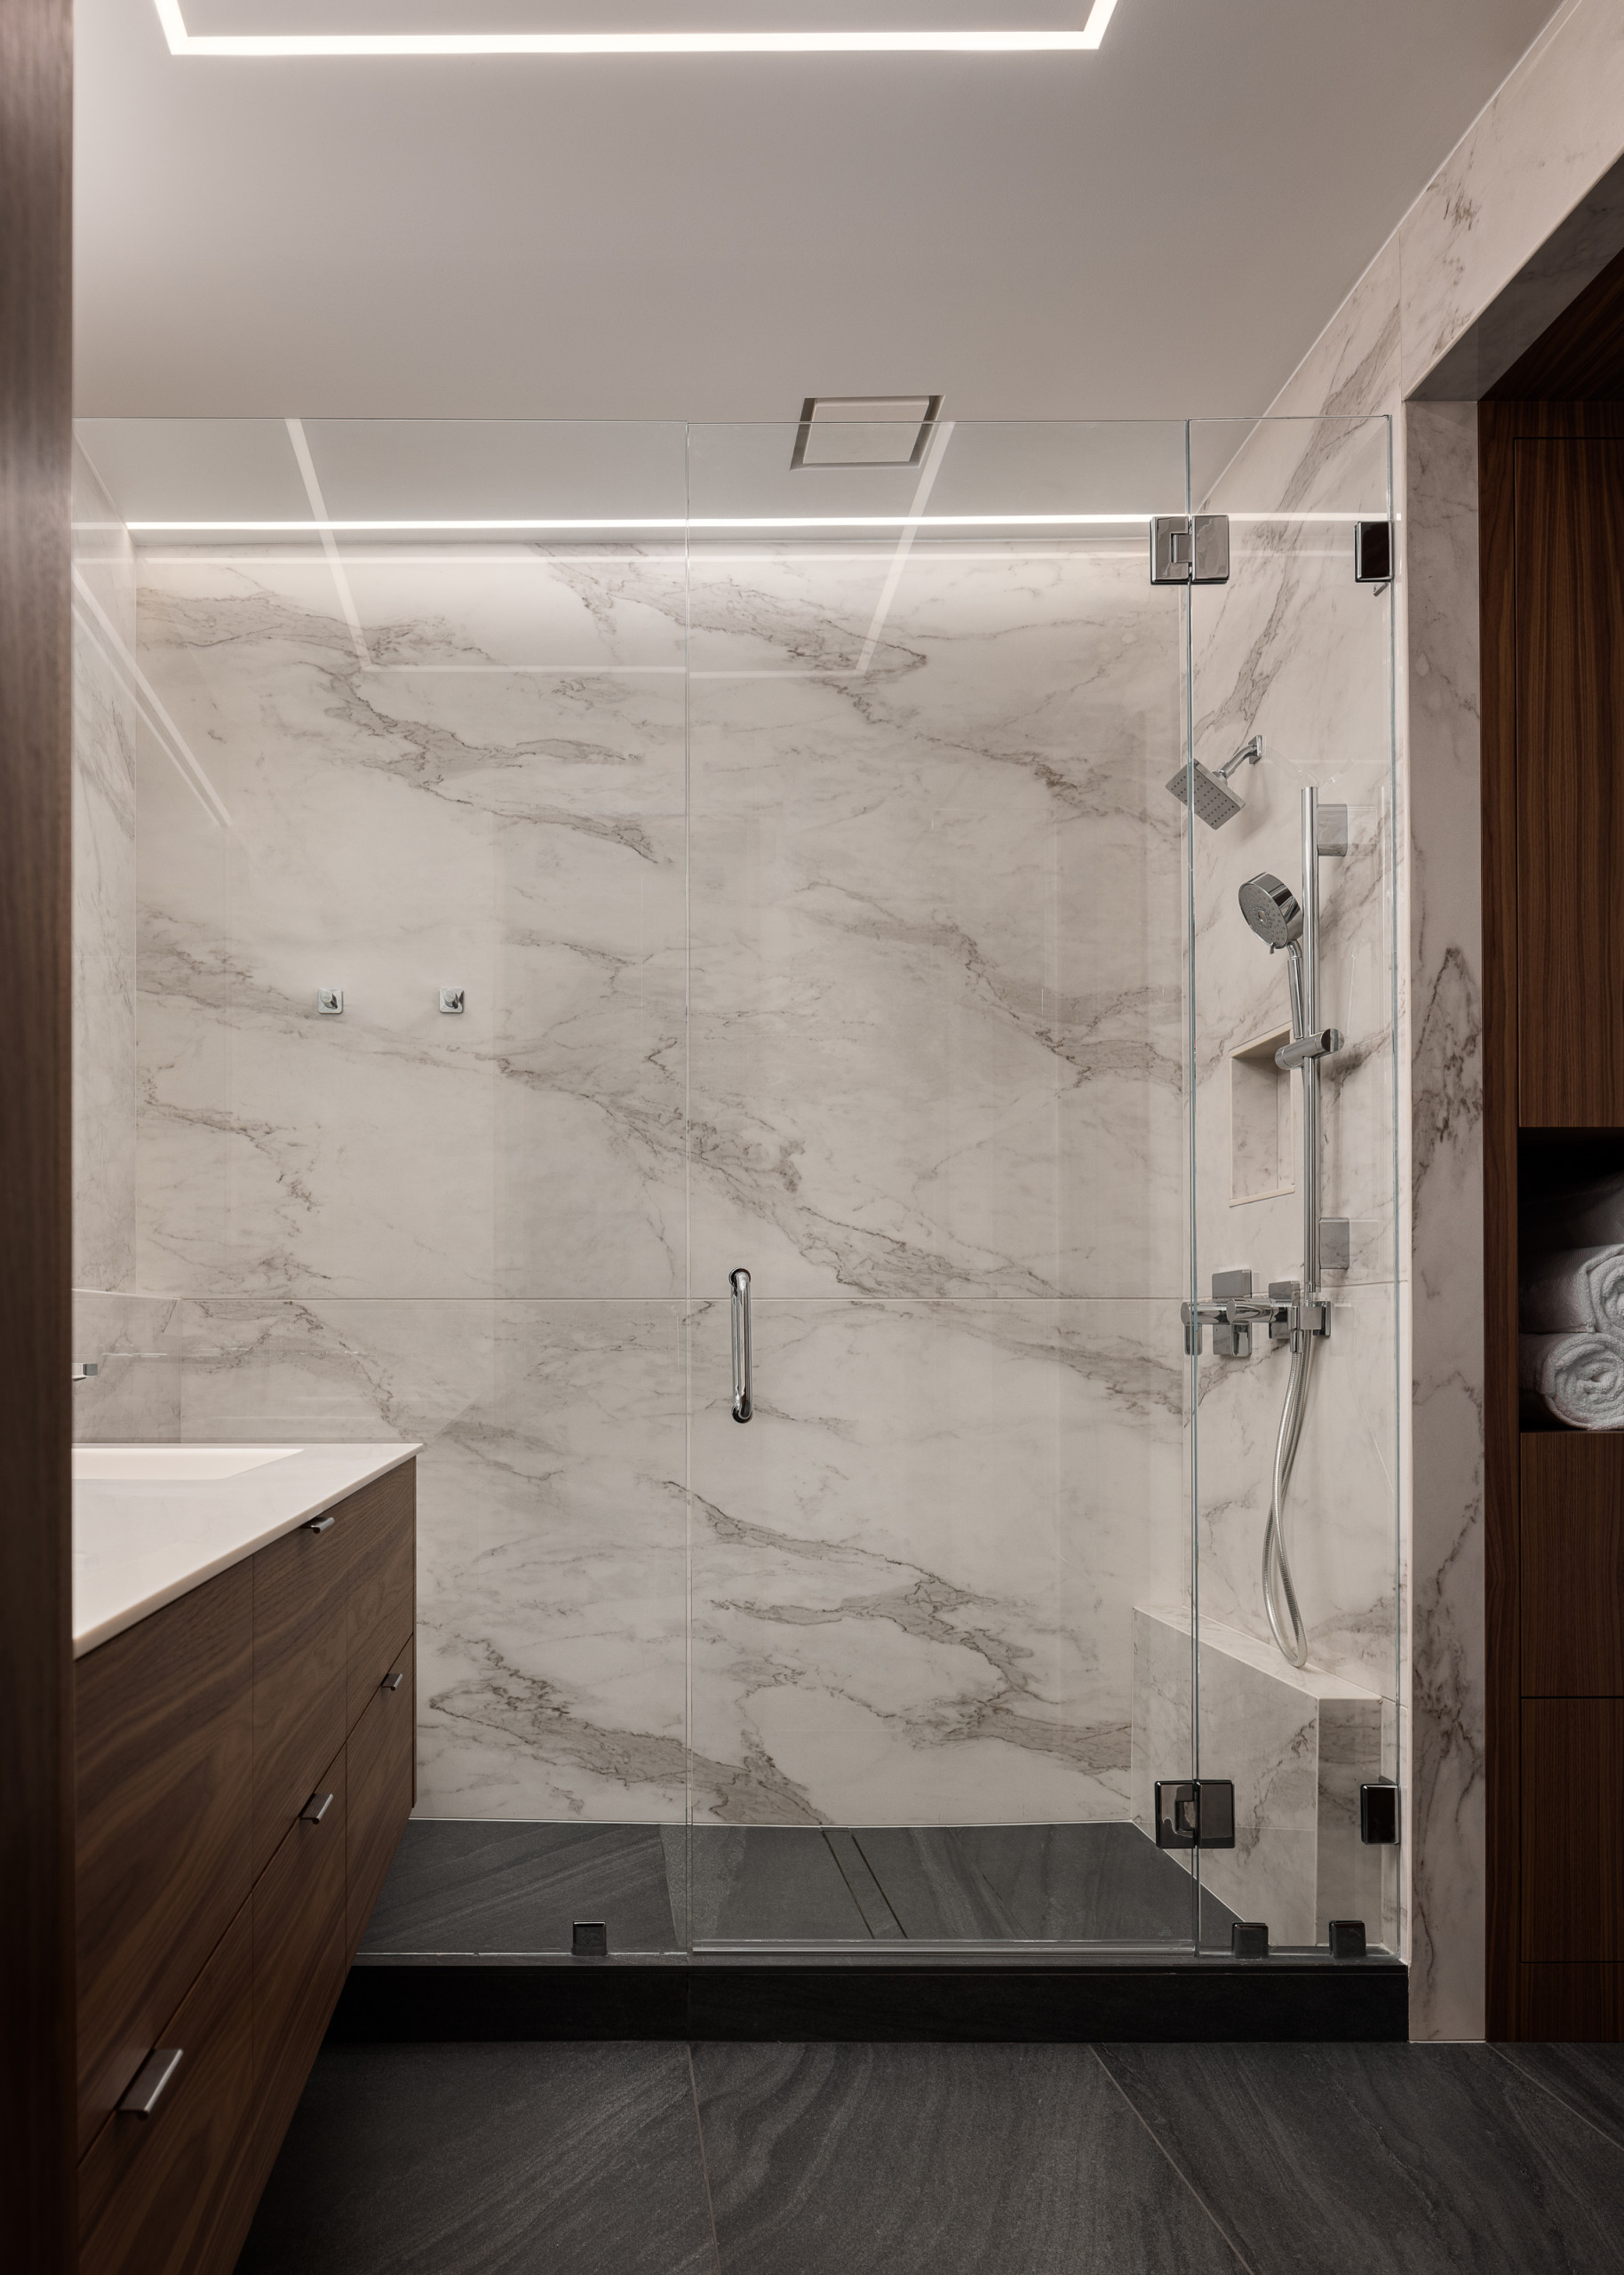 Wallstreet Residence | A Modern Bathroom Renovation